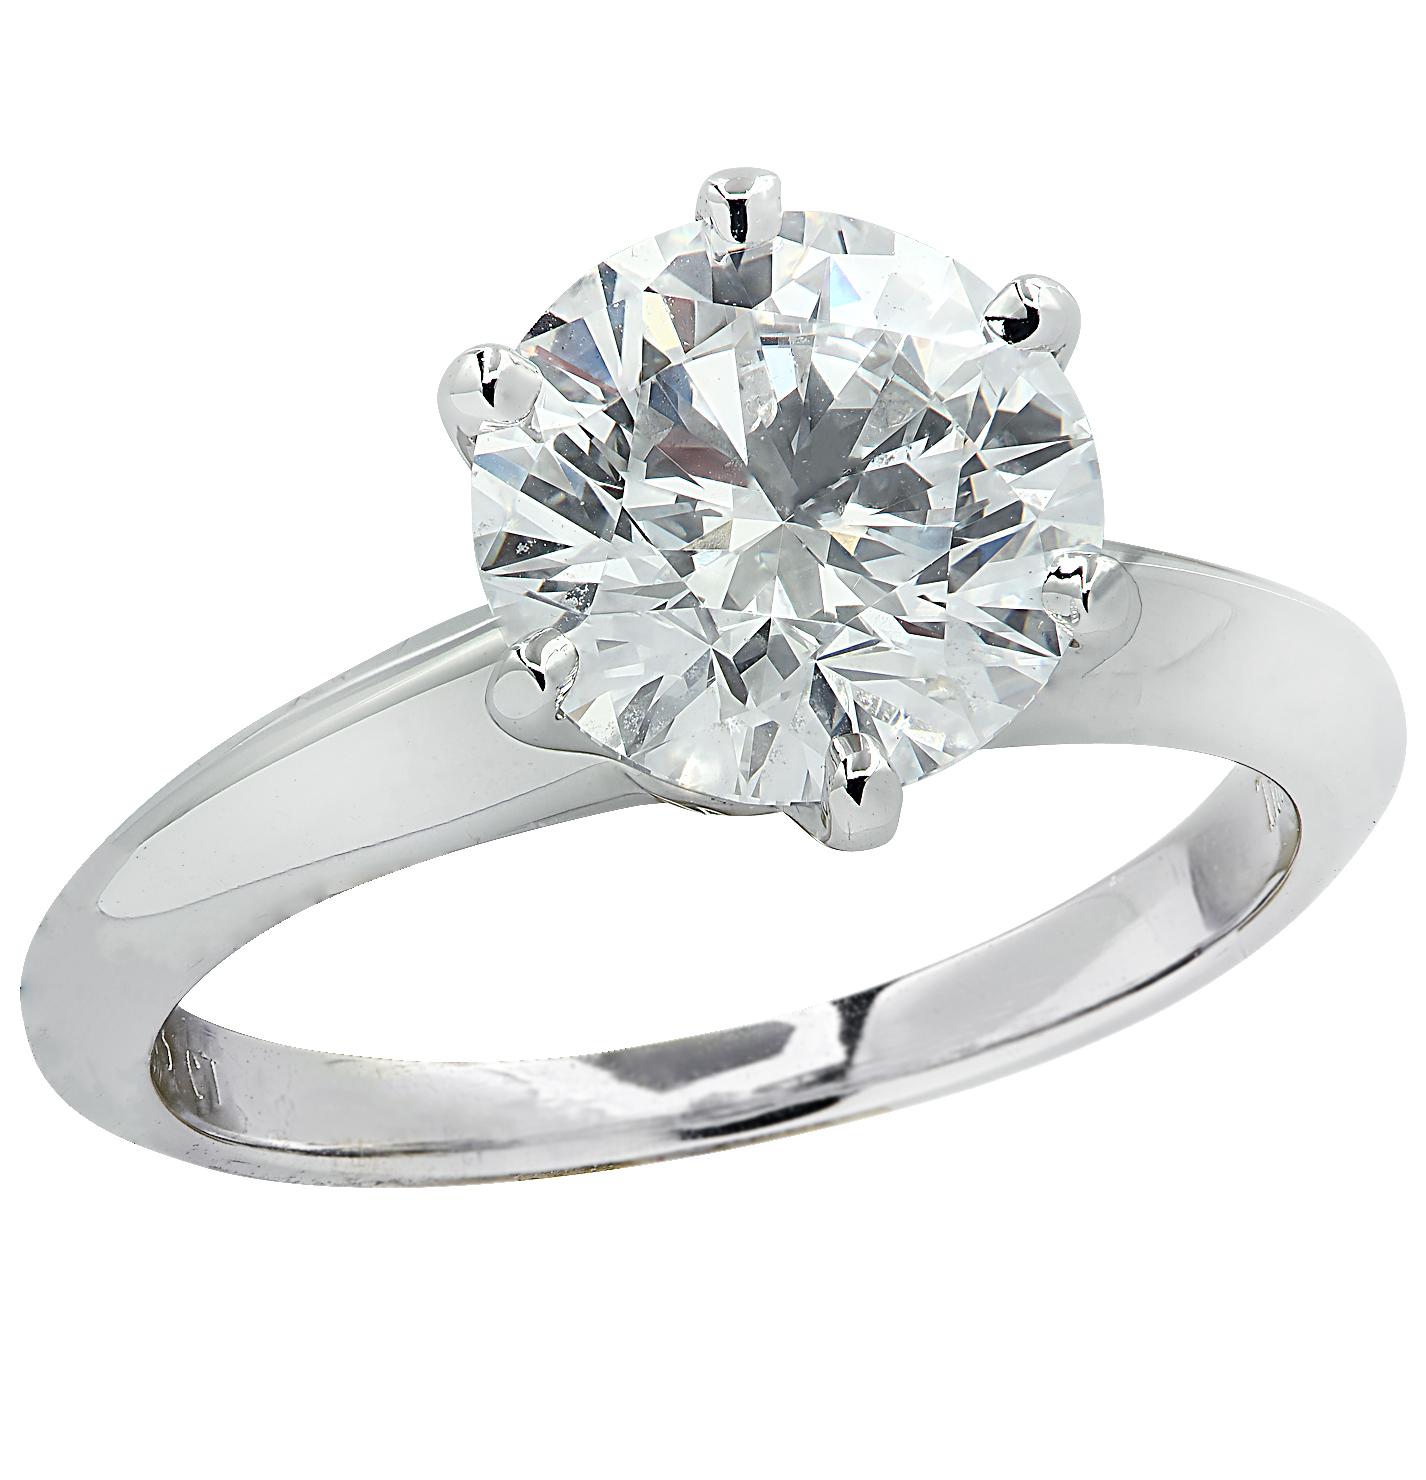 Women's or Men's Tiffany & Co. 1.73 Carat Diamond and Platinum Engagement Ring